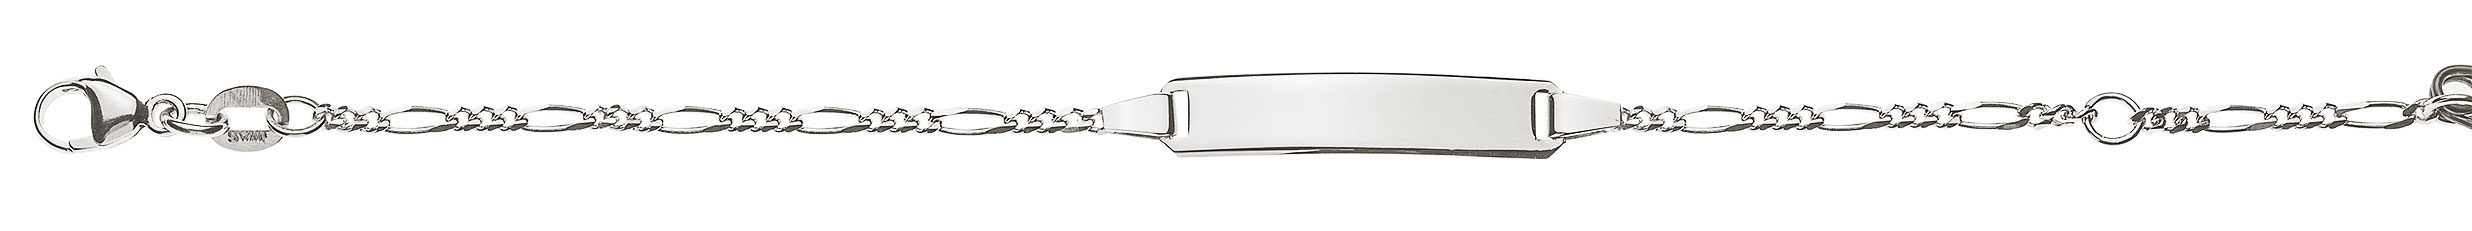 AURONOS Prestige ID-Bracelet en or blanc 18k Chaîne Figaro 16cm